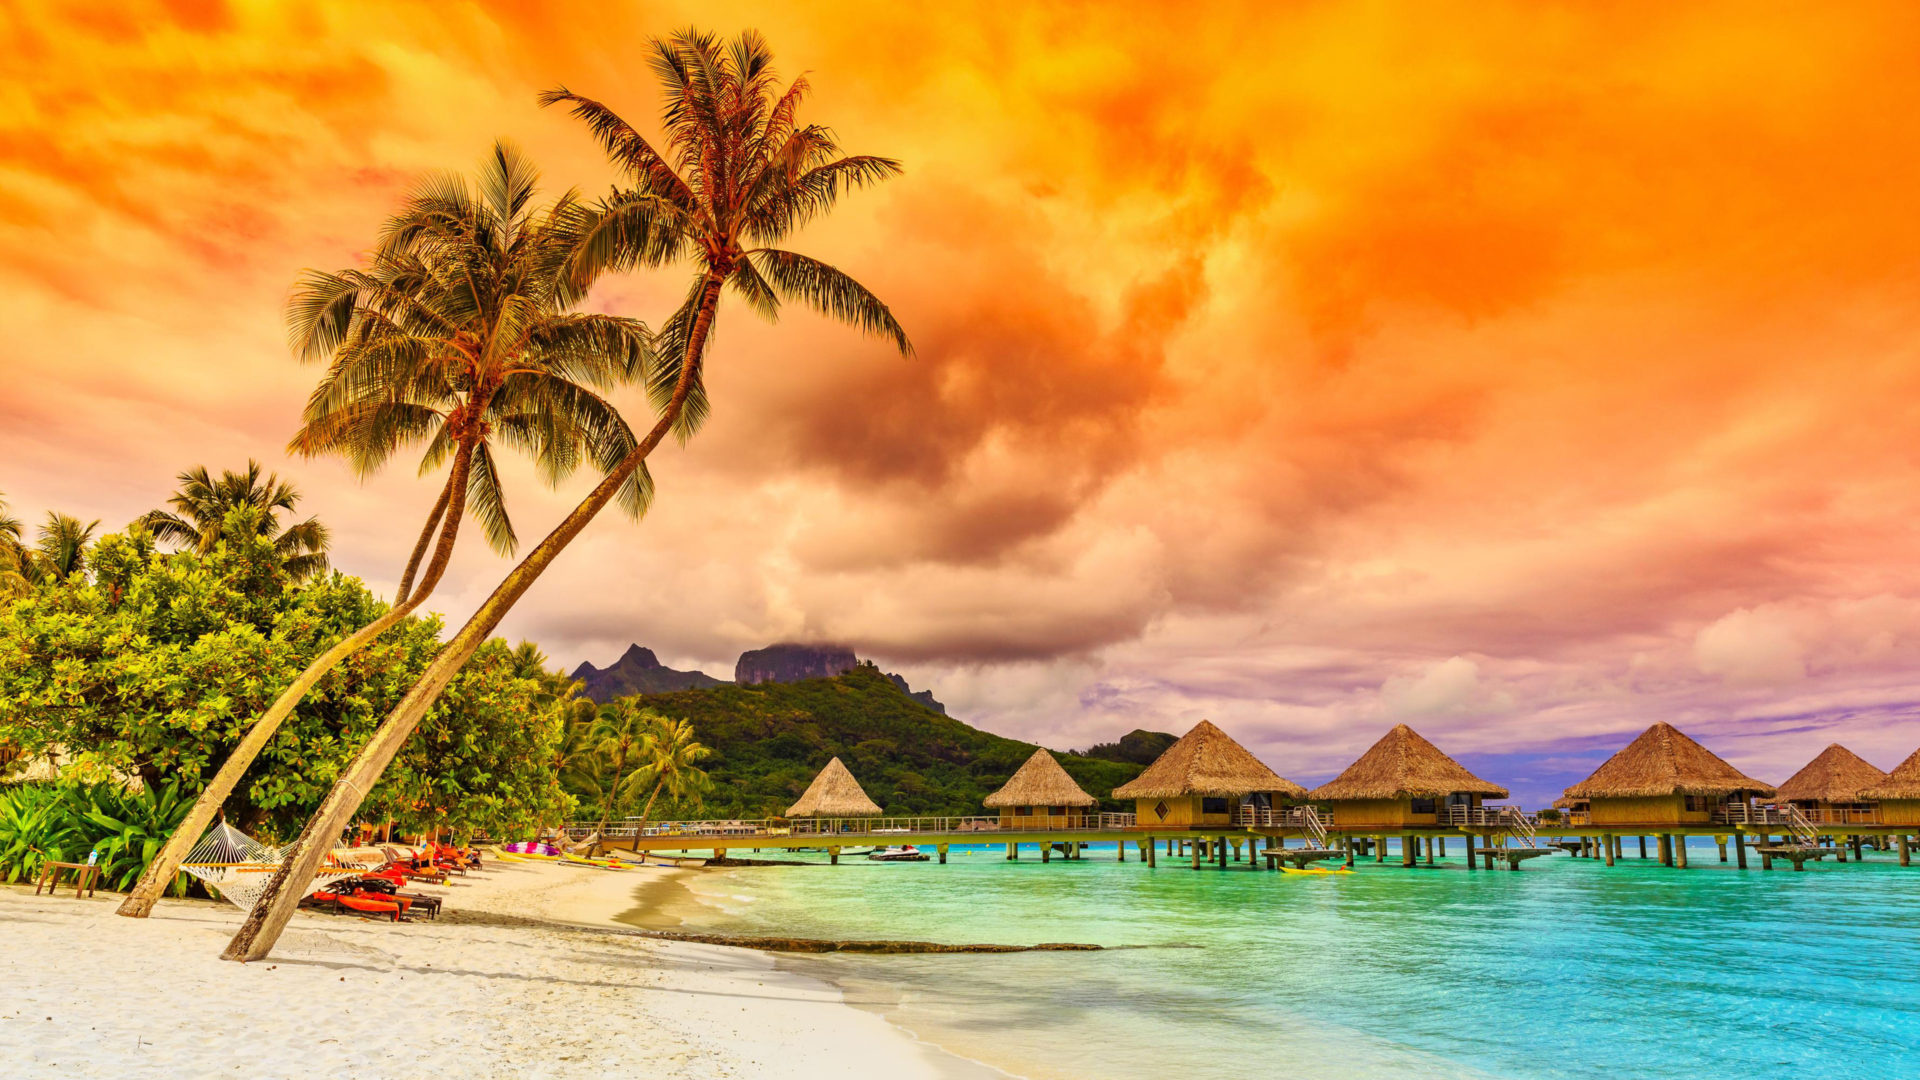 Bora Bora: Sunset, Tropical sea, Beach, Bungalows. 1920x1080 Full HD Wallpaper.